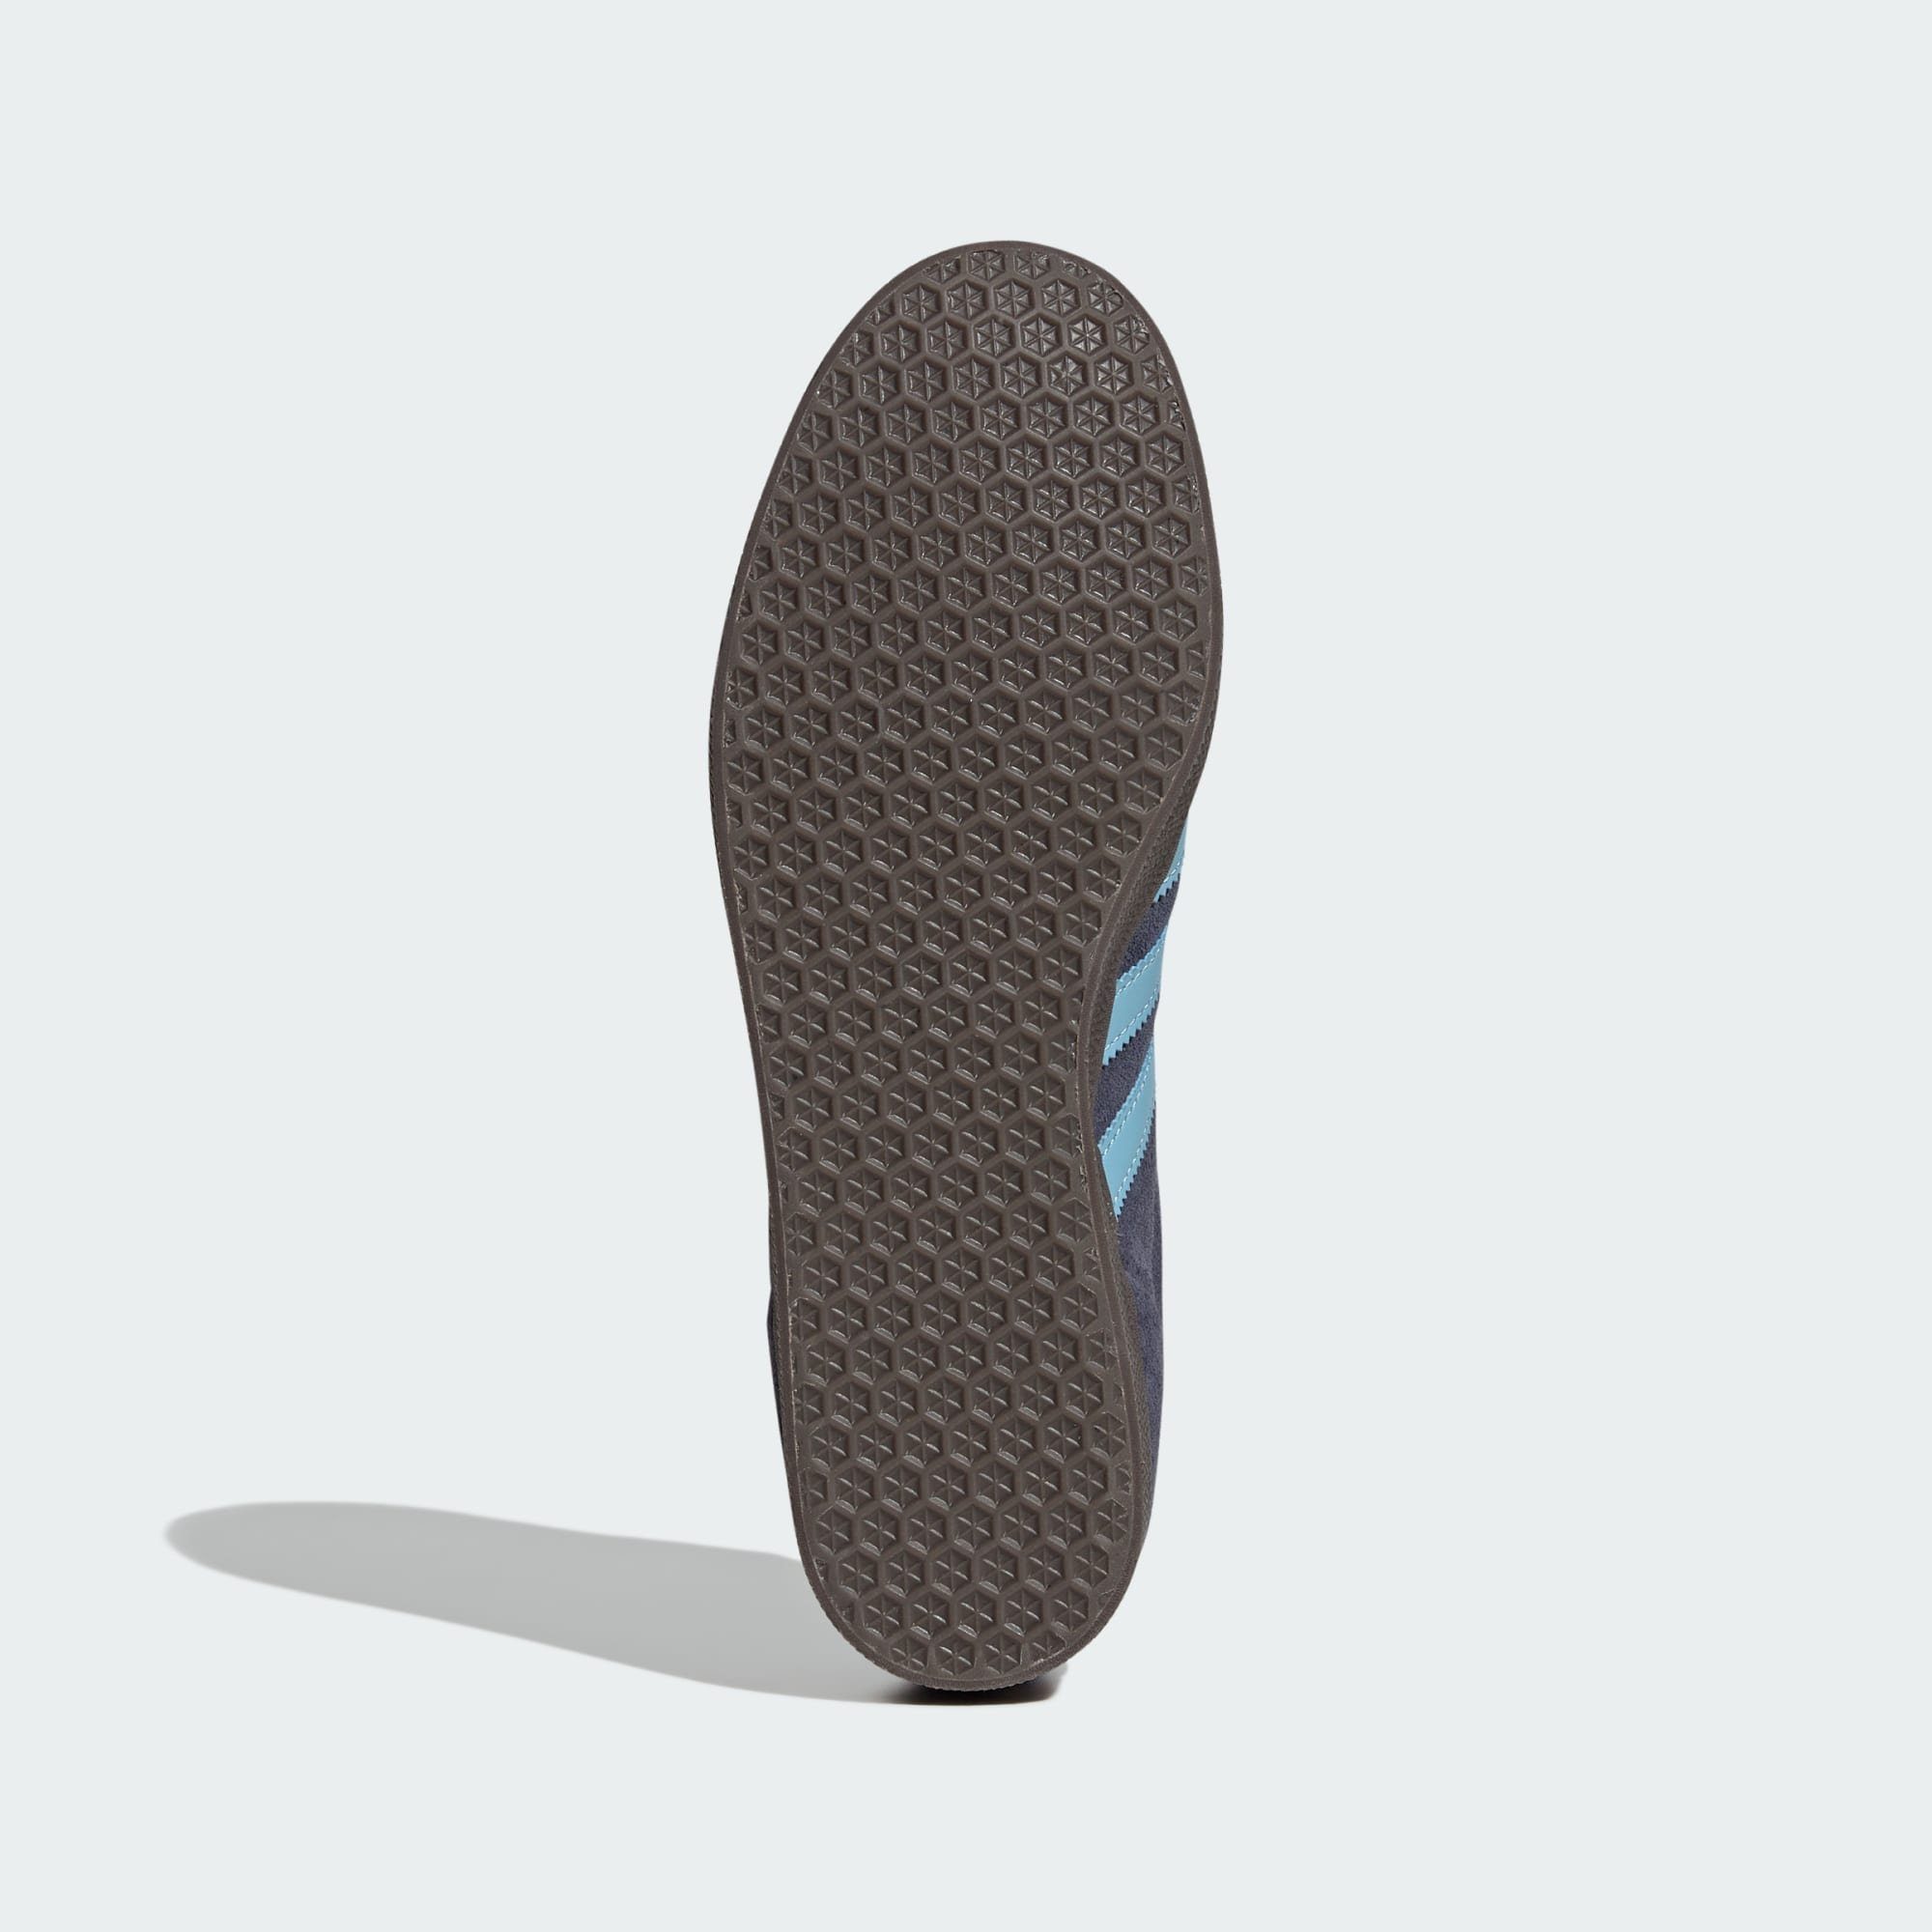 Navy Clear SCHUH Blue Sneaker Gum / GAZELLE adidas Originals Shadow /